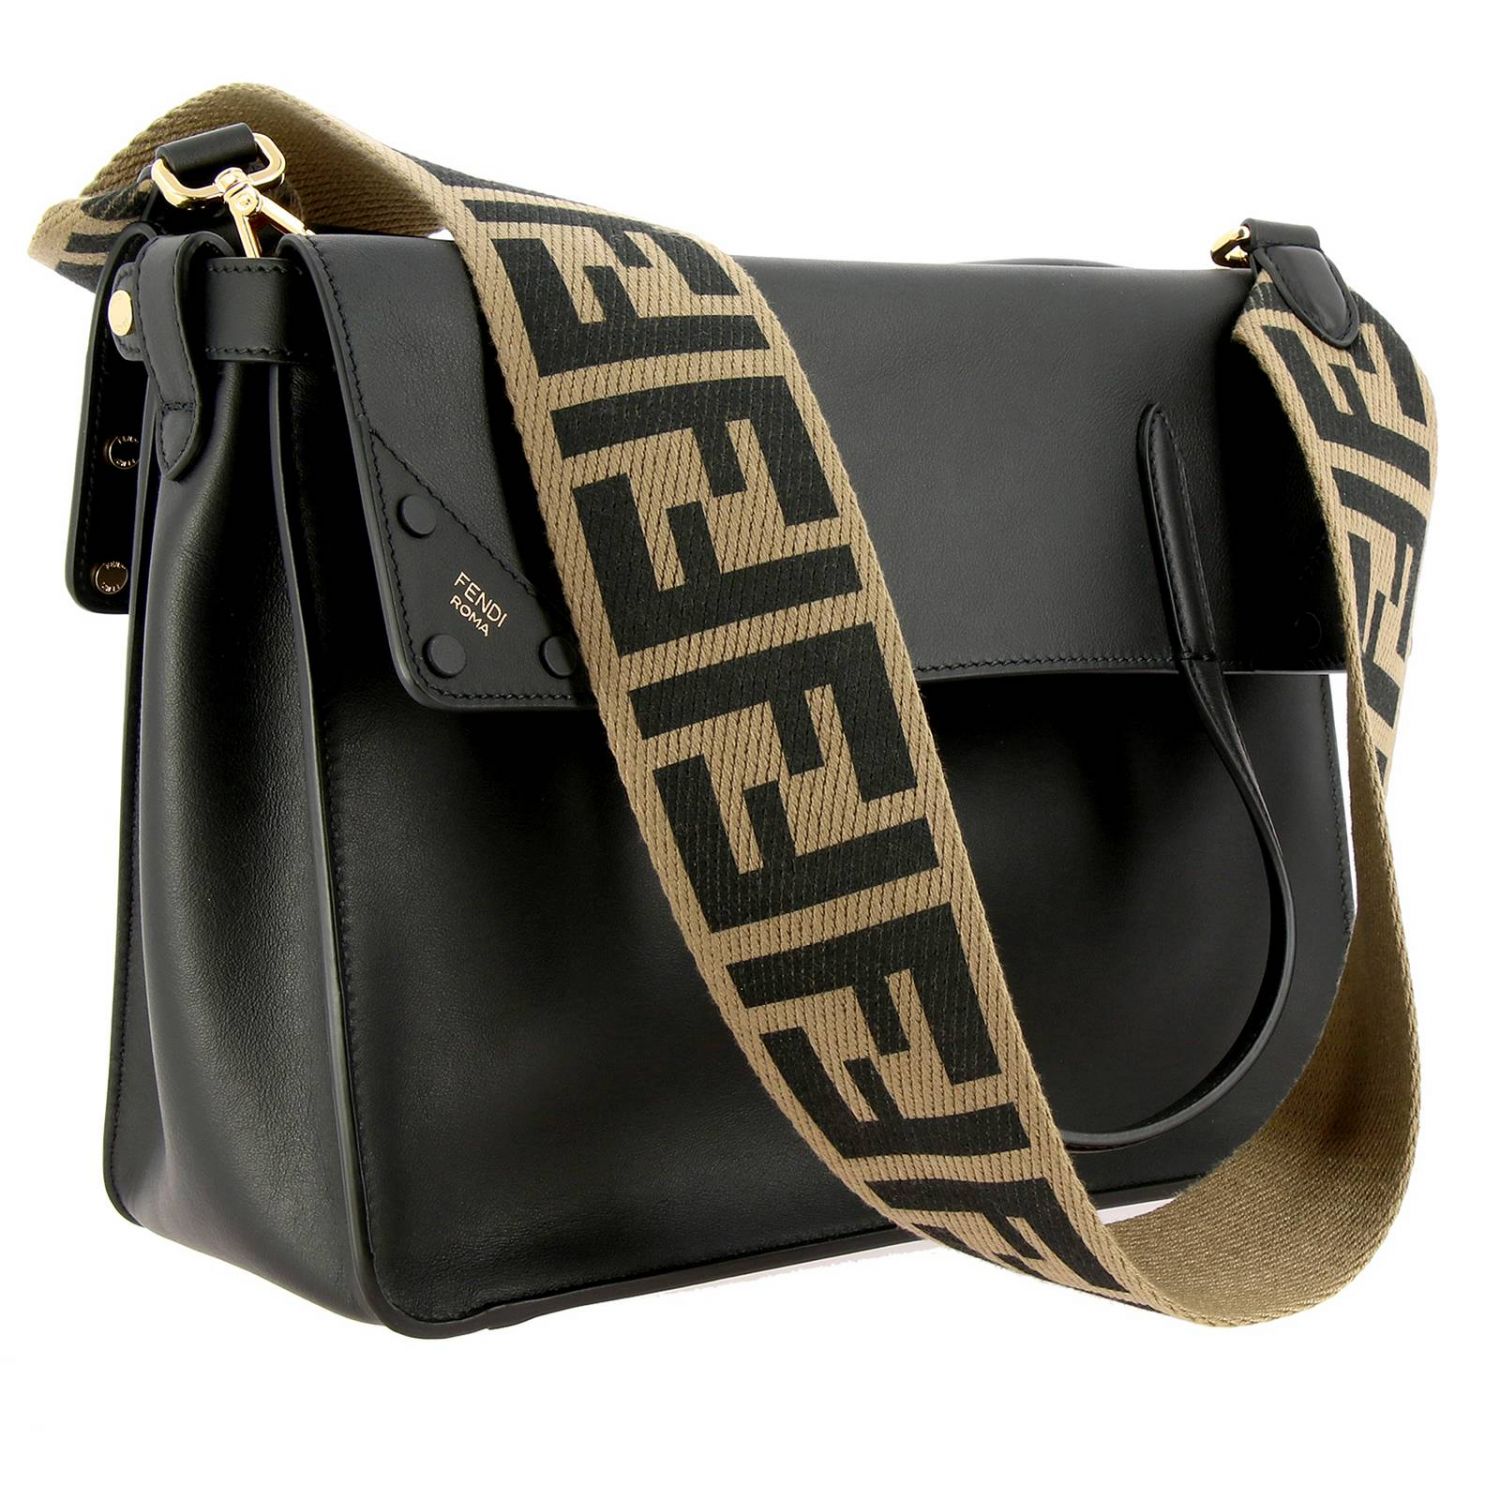 Fendi regular tote bag in smooth leather with FF shoulder strap